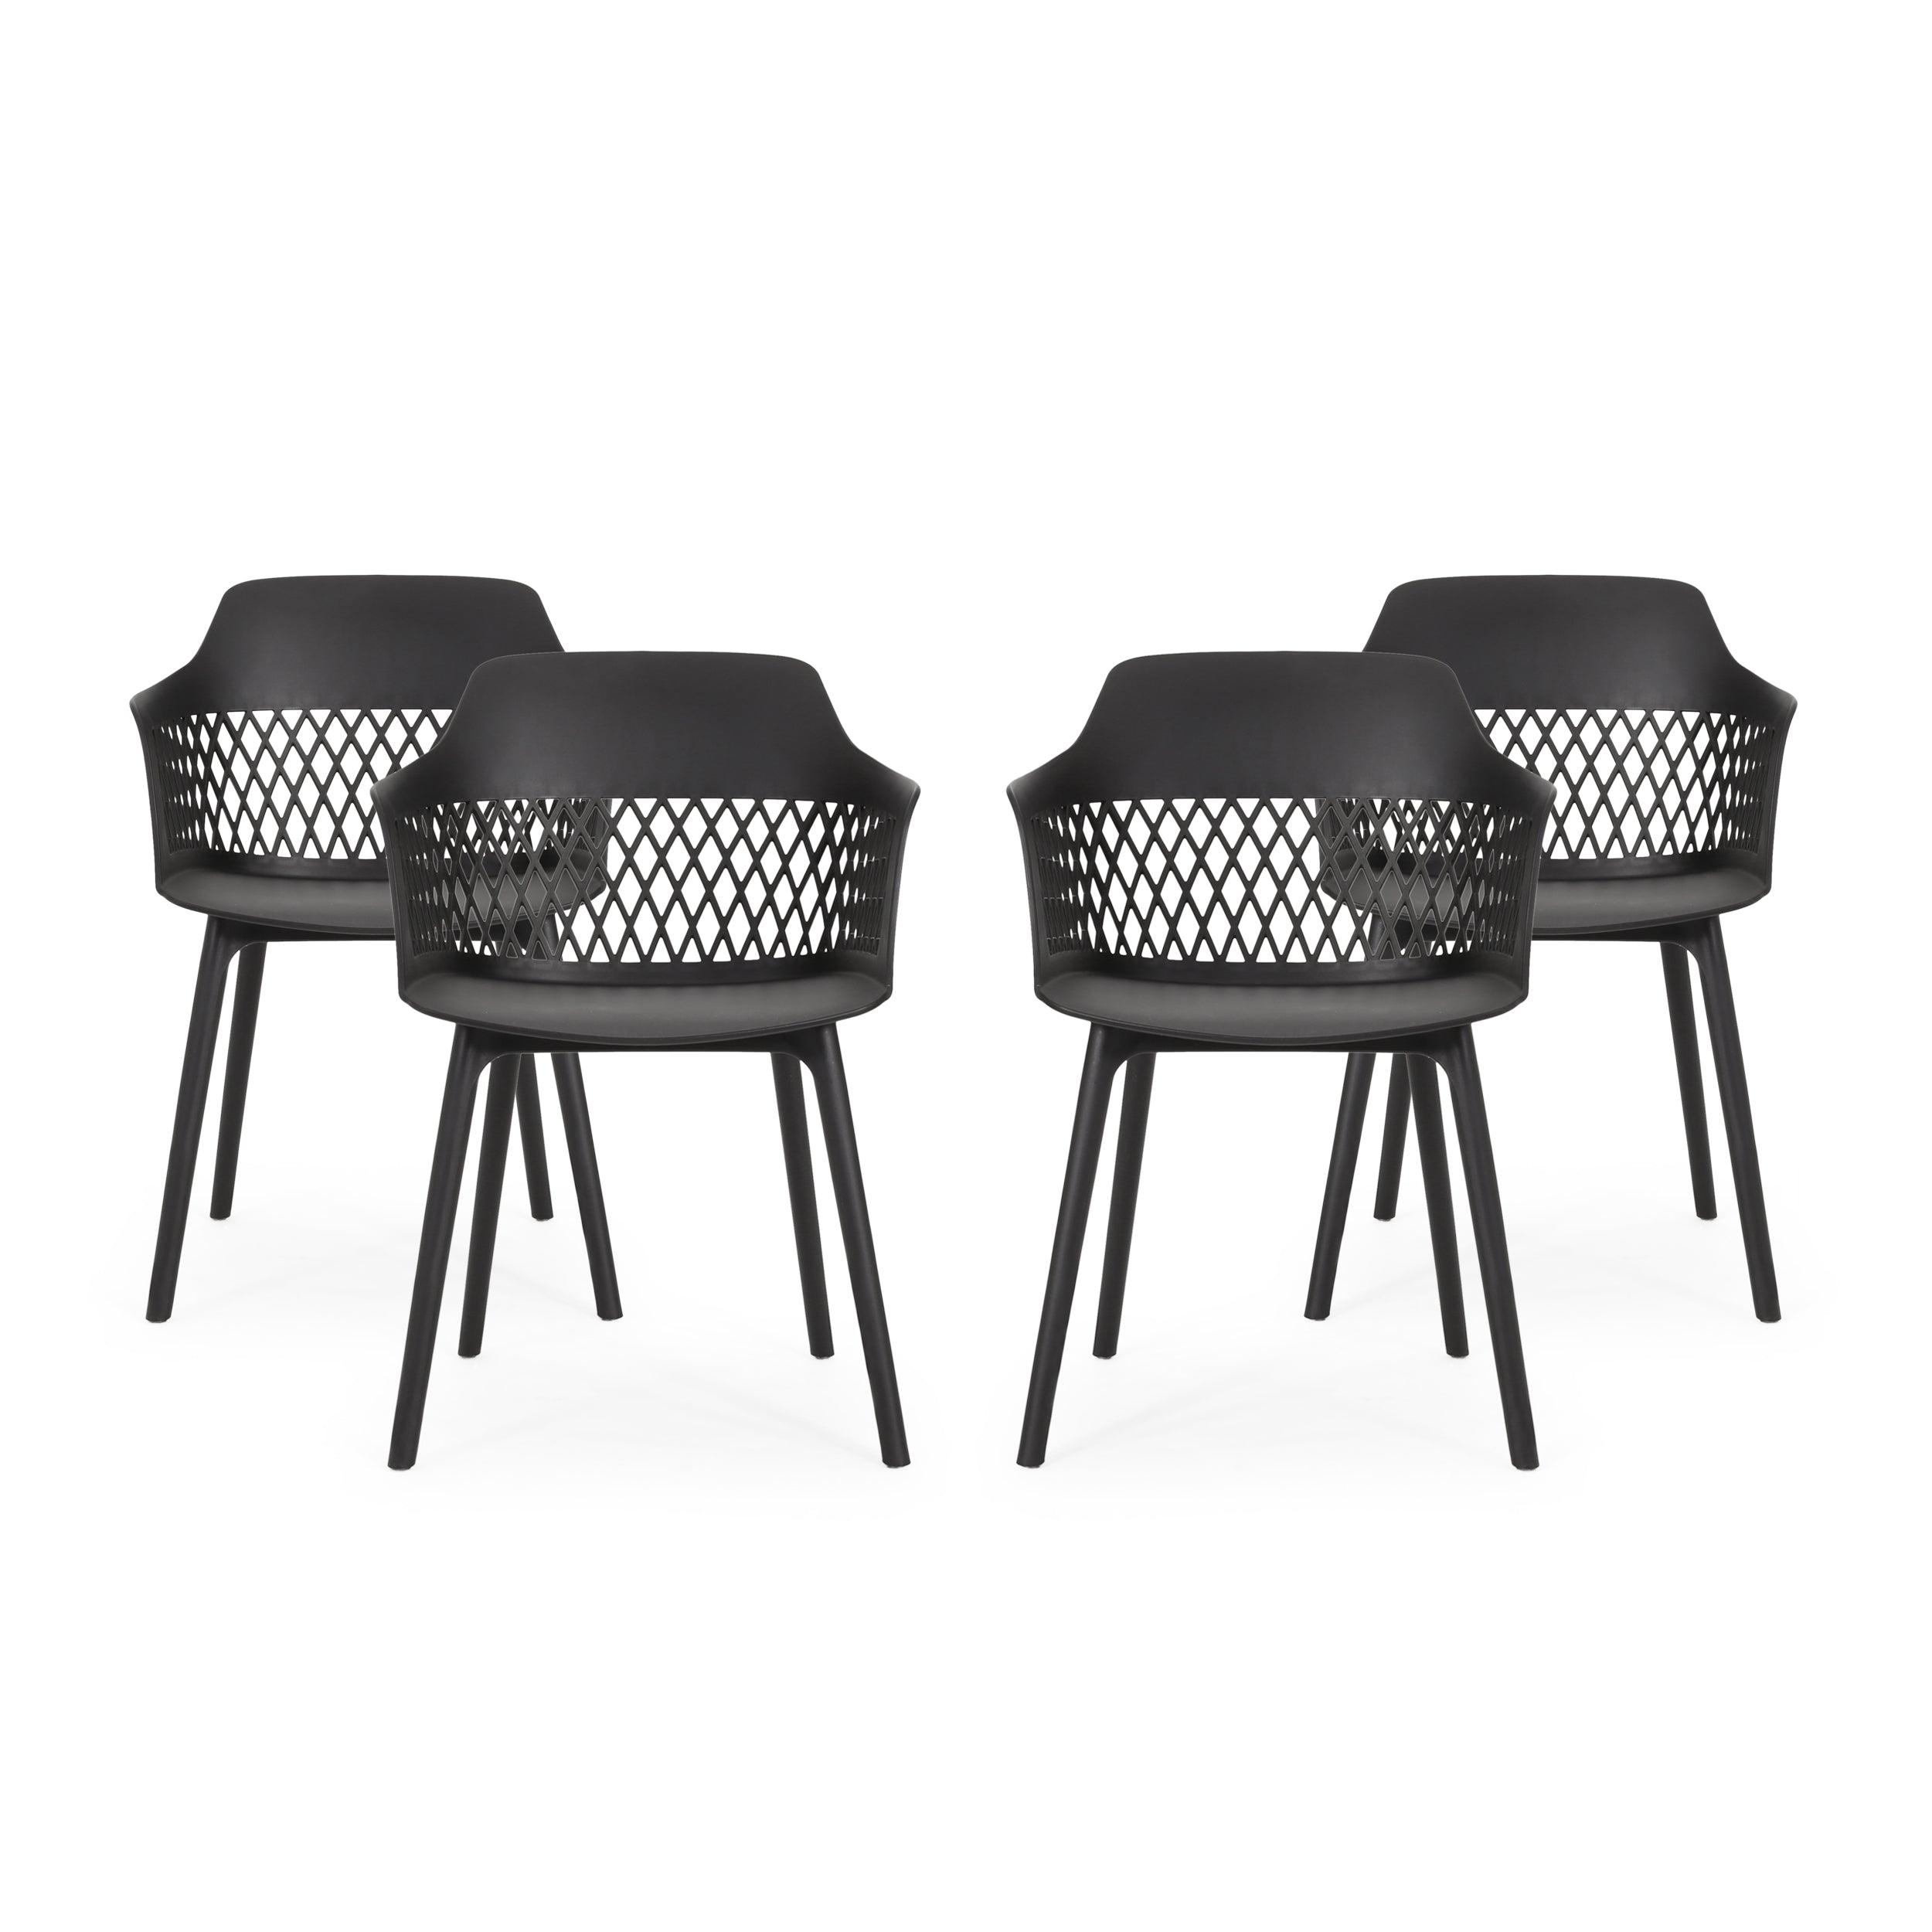 Airyanna Outdoor Modern Dining Chair Set of 4 Mint